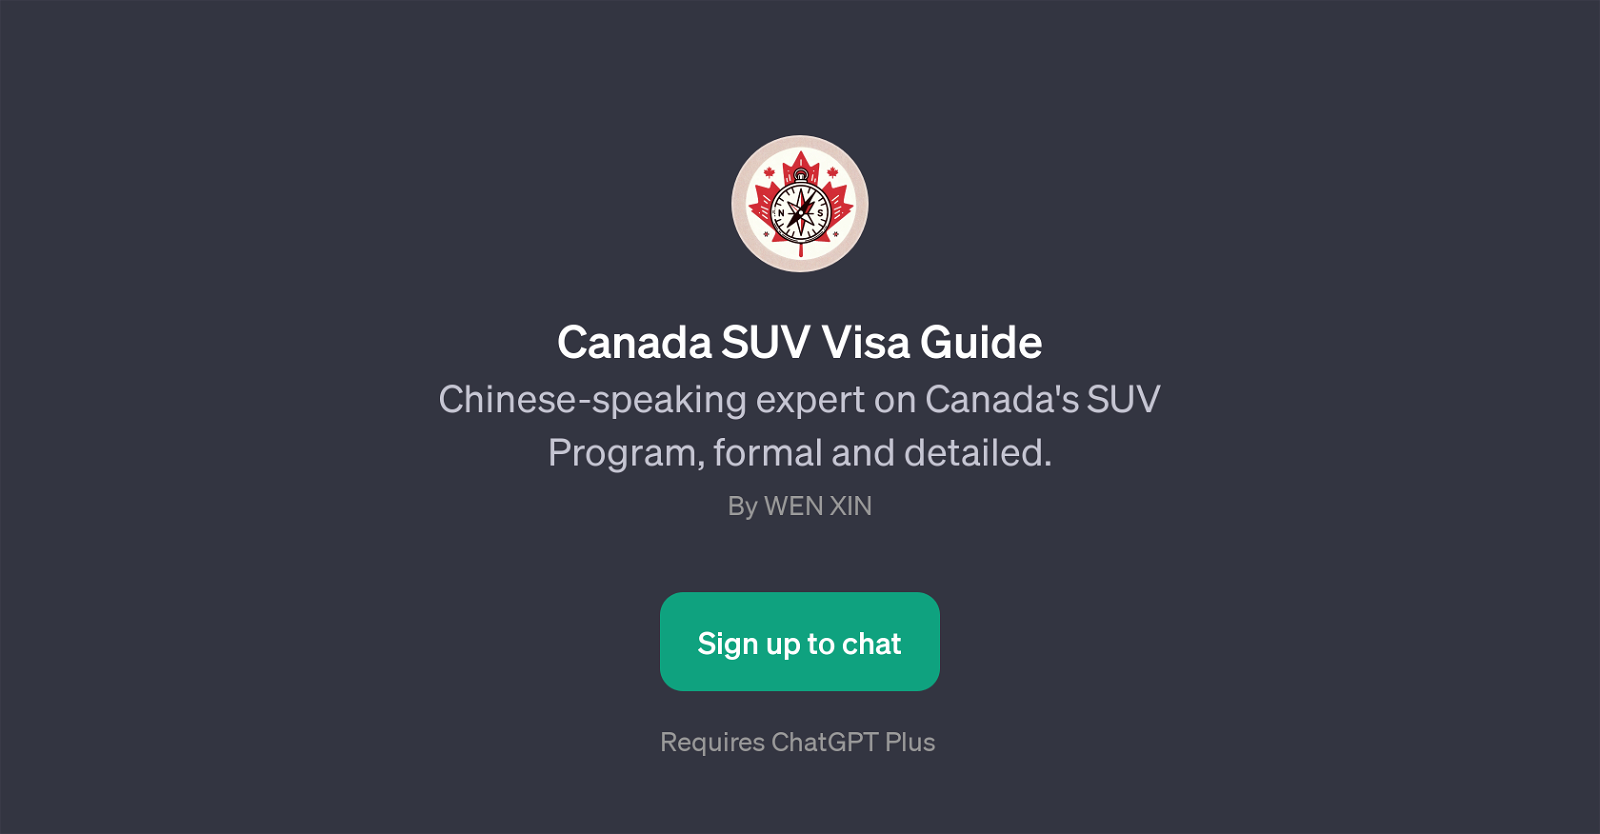 Canada SUV Visa Guide website